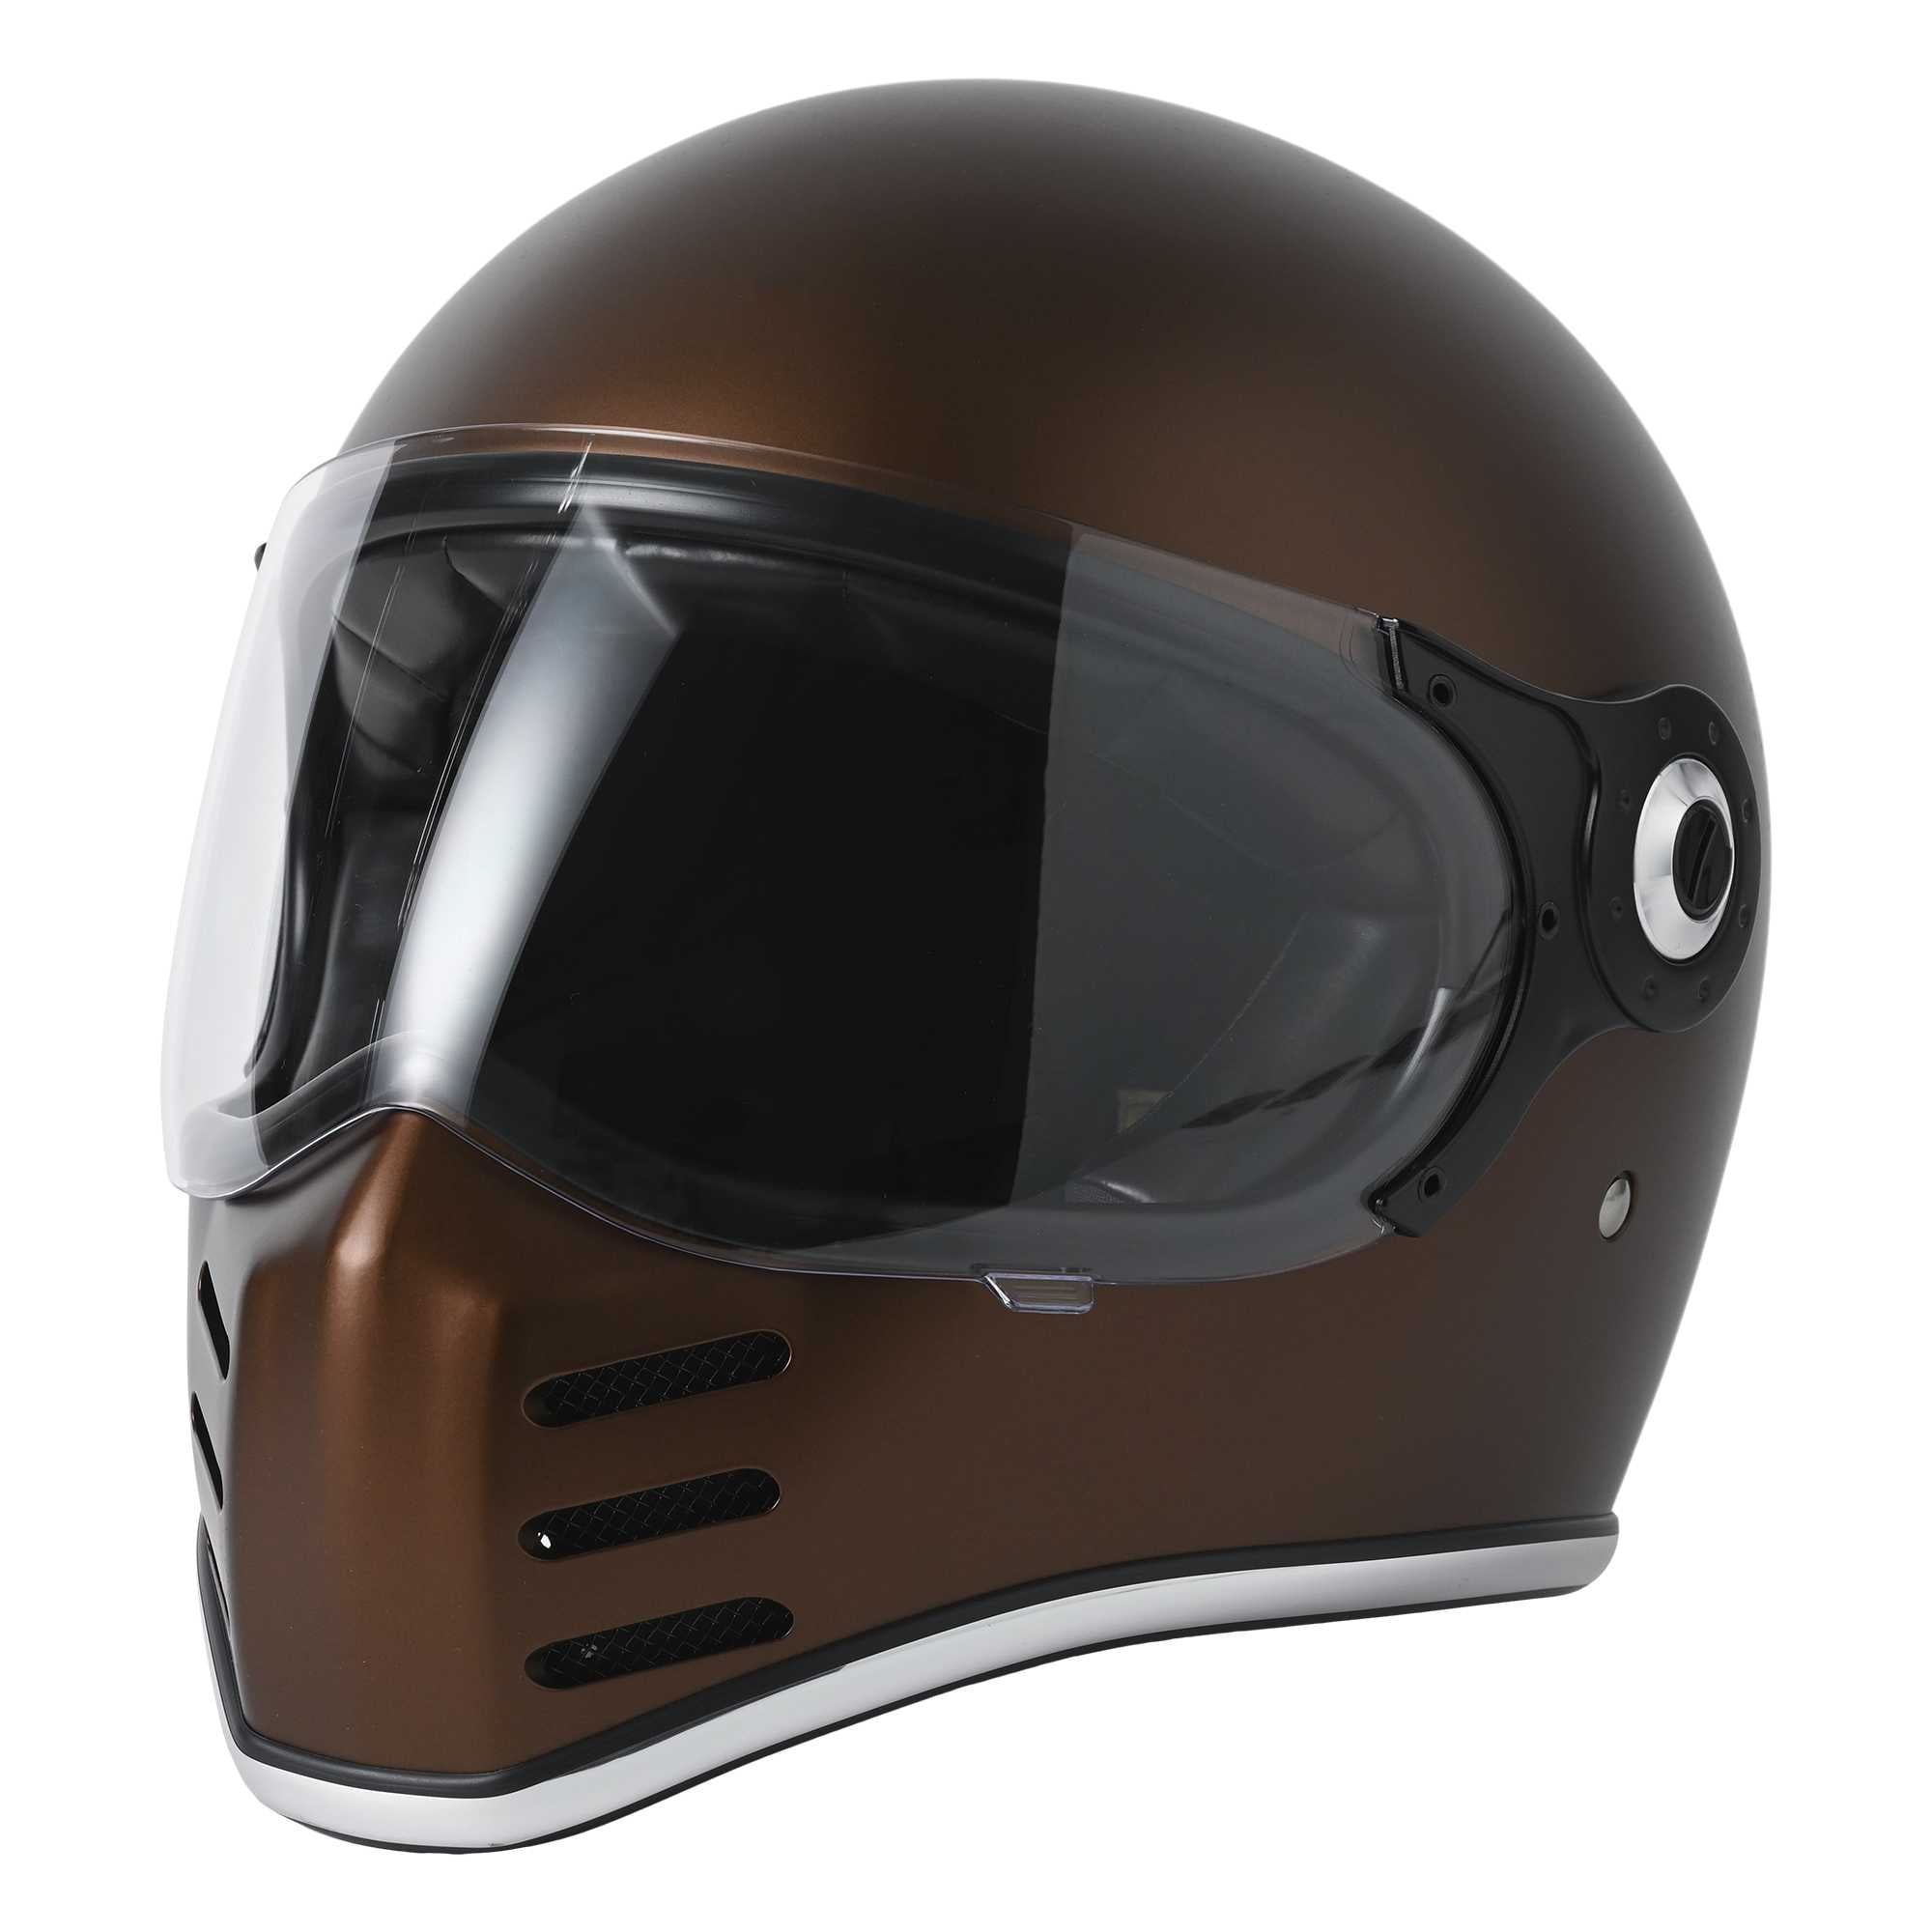 RIDEZ X HELMET 限量型号 MATT BROWN 全脸摩托车头盔